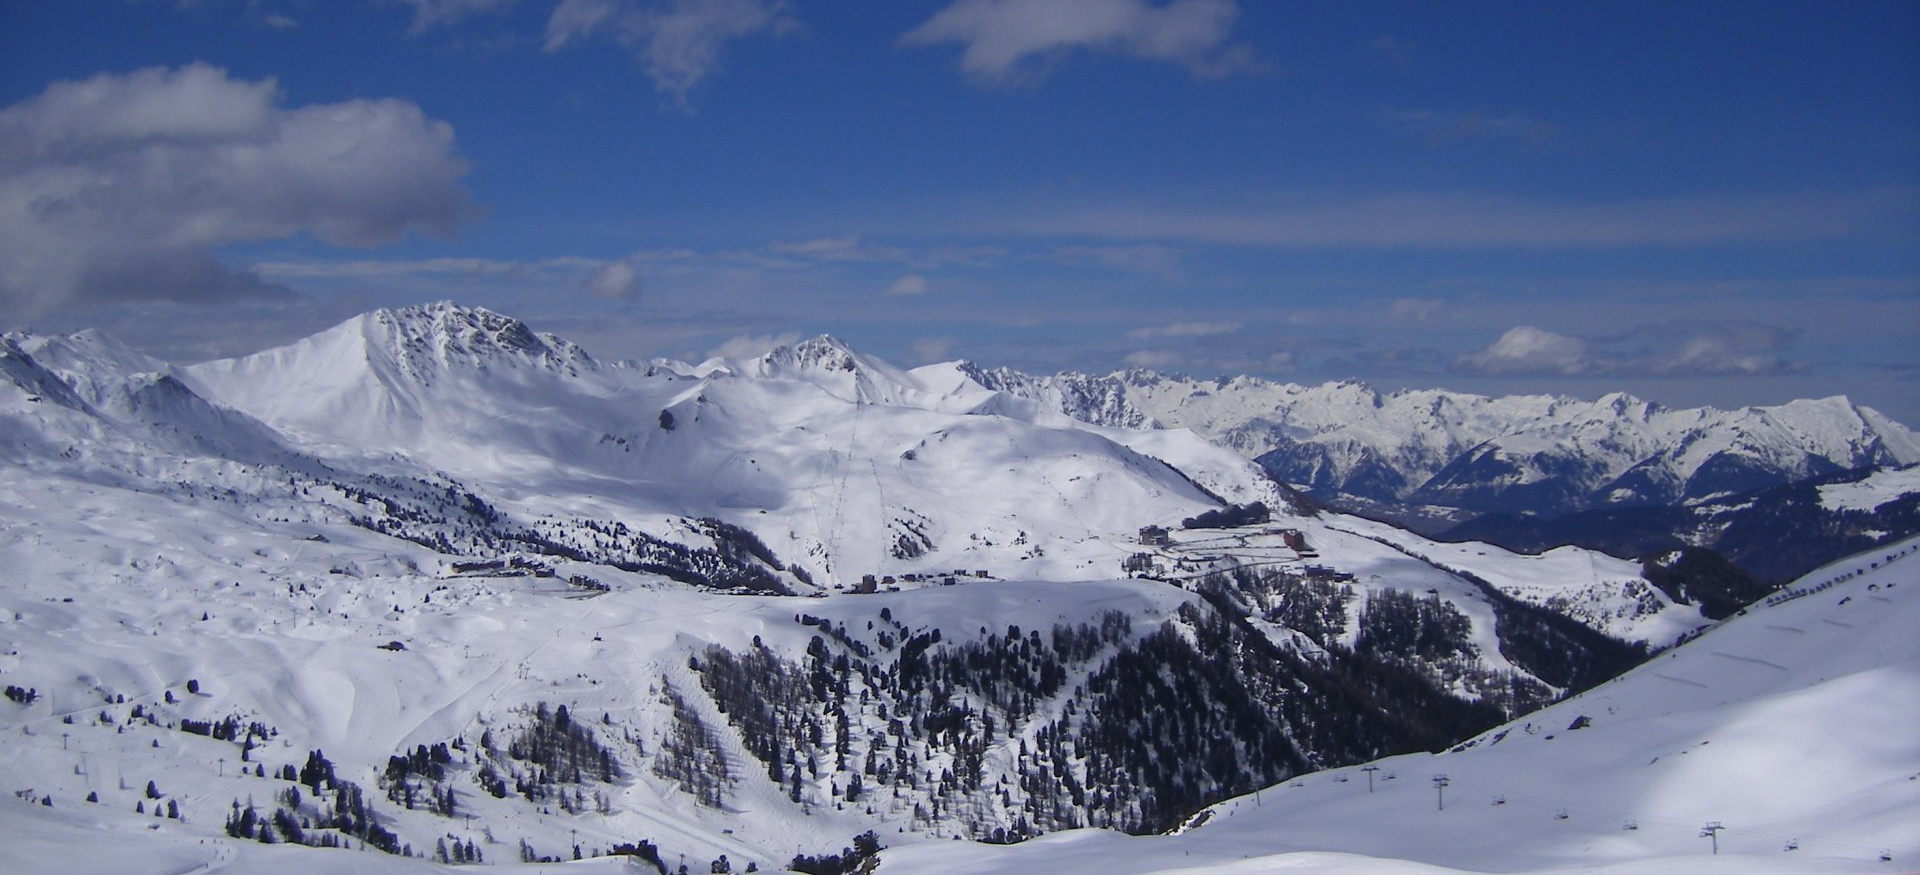 La Plagne - Snowy View Mountain and Sky